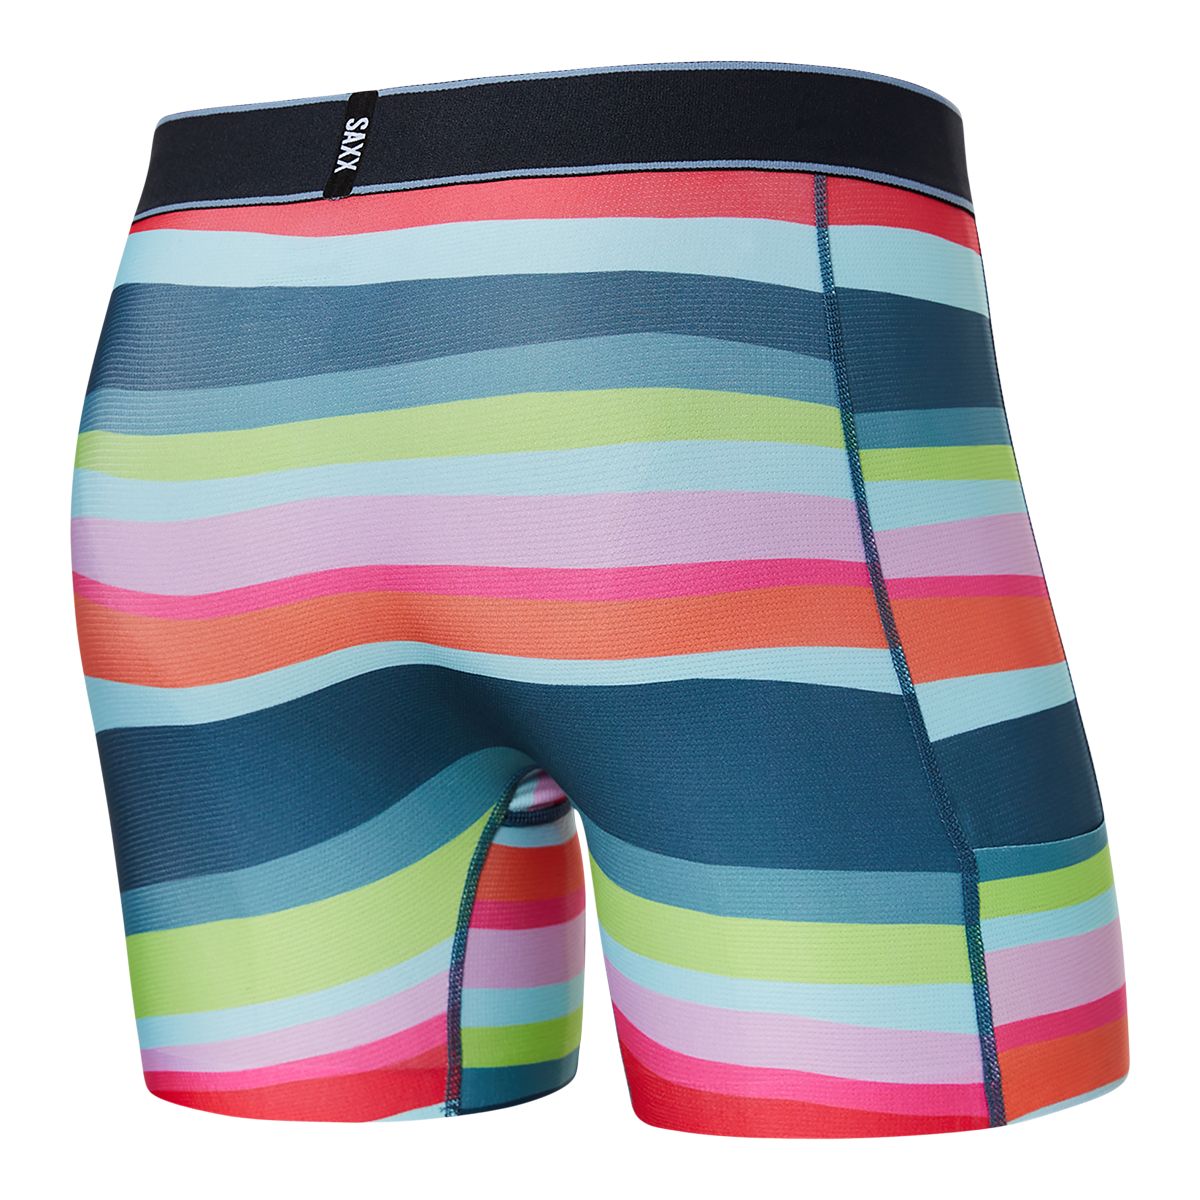 SAXX Hydroliner Men's Boxer Brief, Aquatic Underwear, Quick-Dry